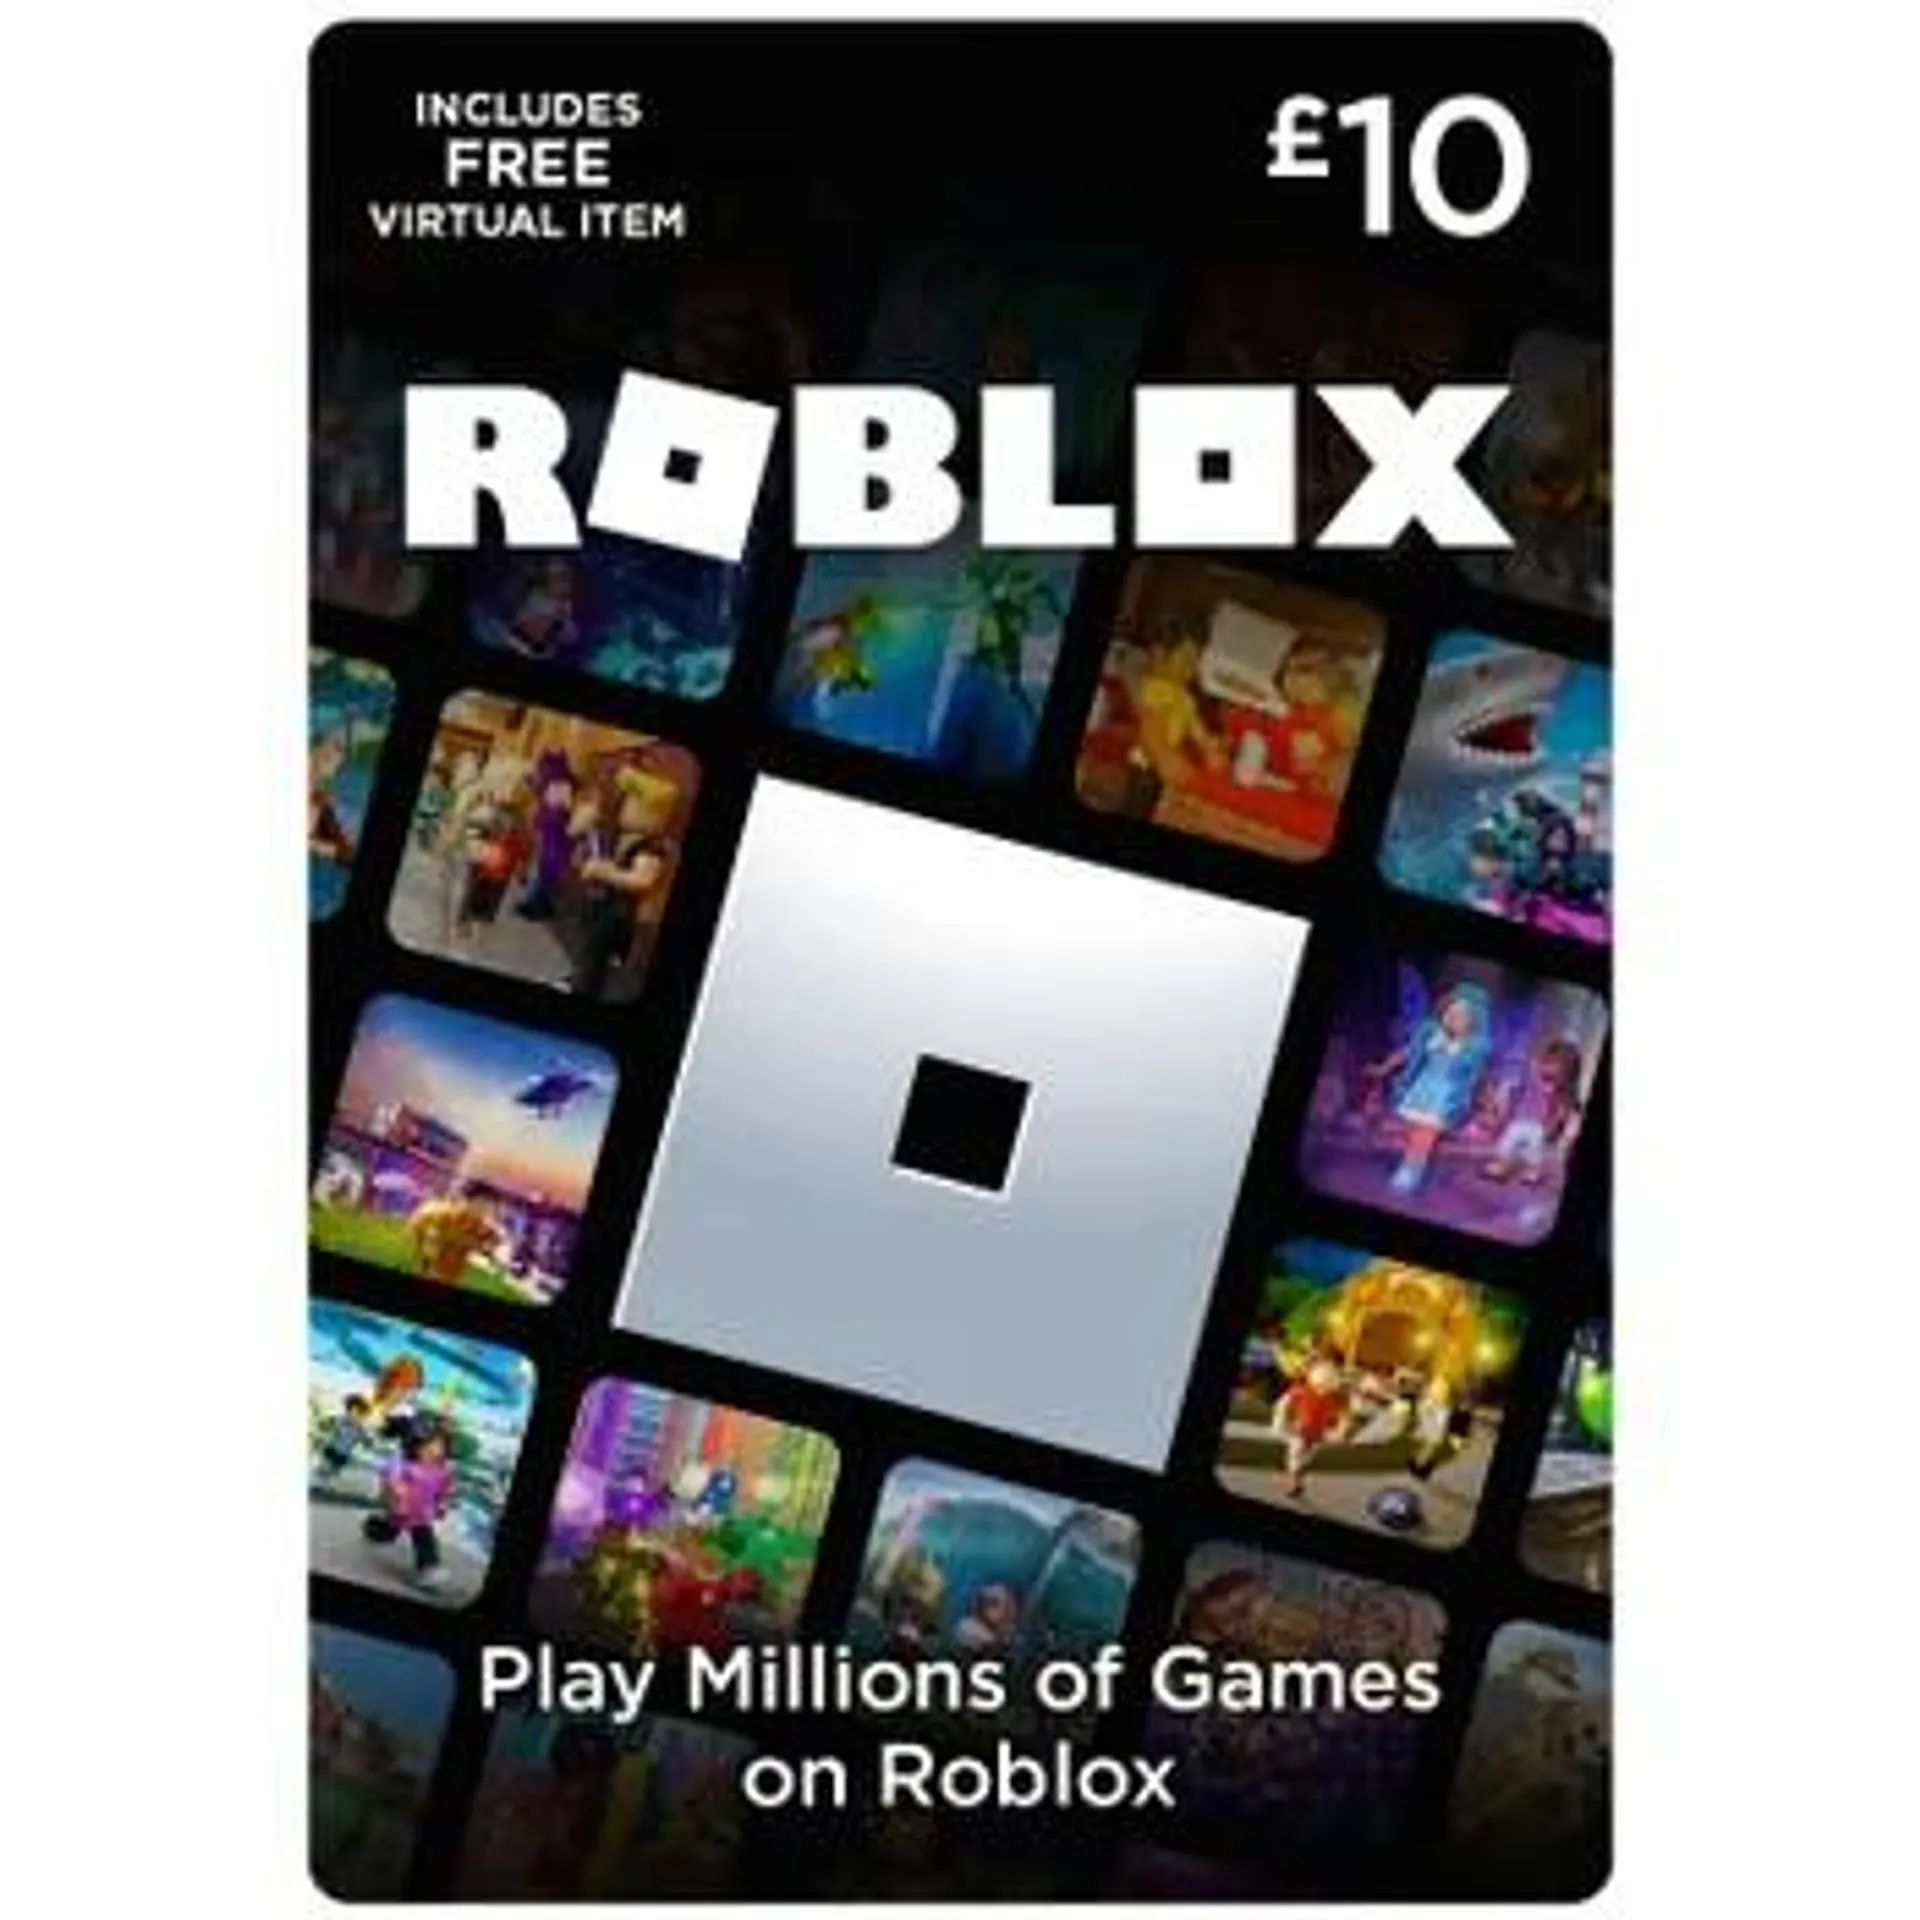 Roblox £10 Digital Gift Card (United Kingdom Only. Includes Free Virtual Item) Digital Download